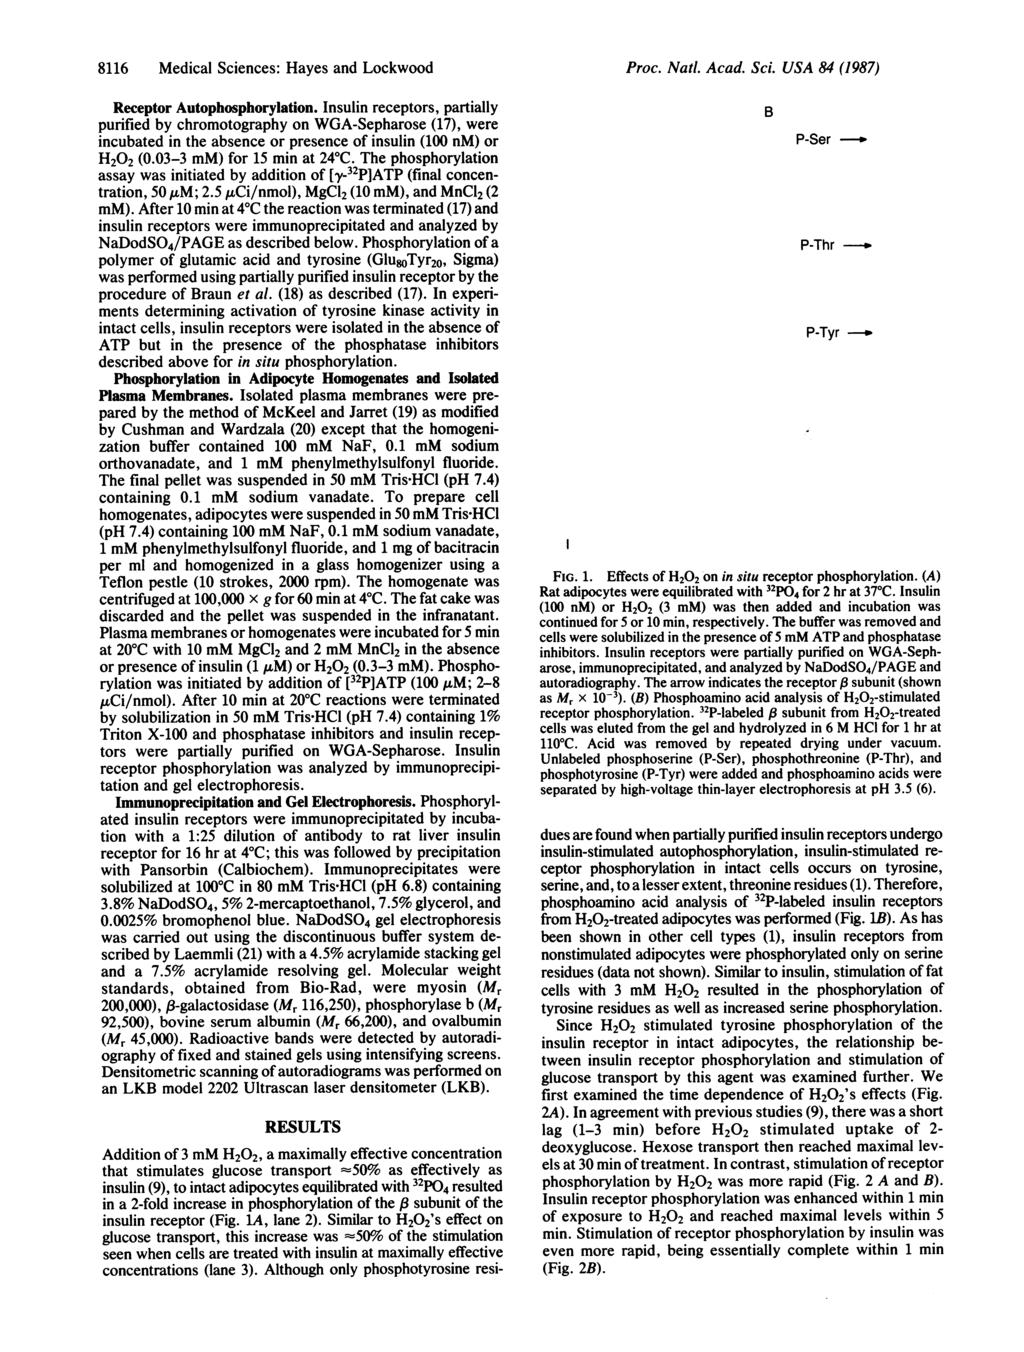 8116 Medical Sciences: Hayes and Lockwood Receptor Autophosphorylation.